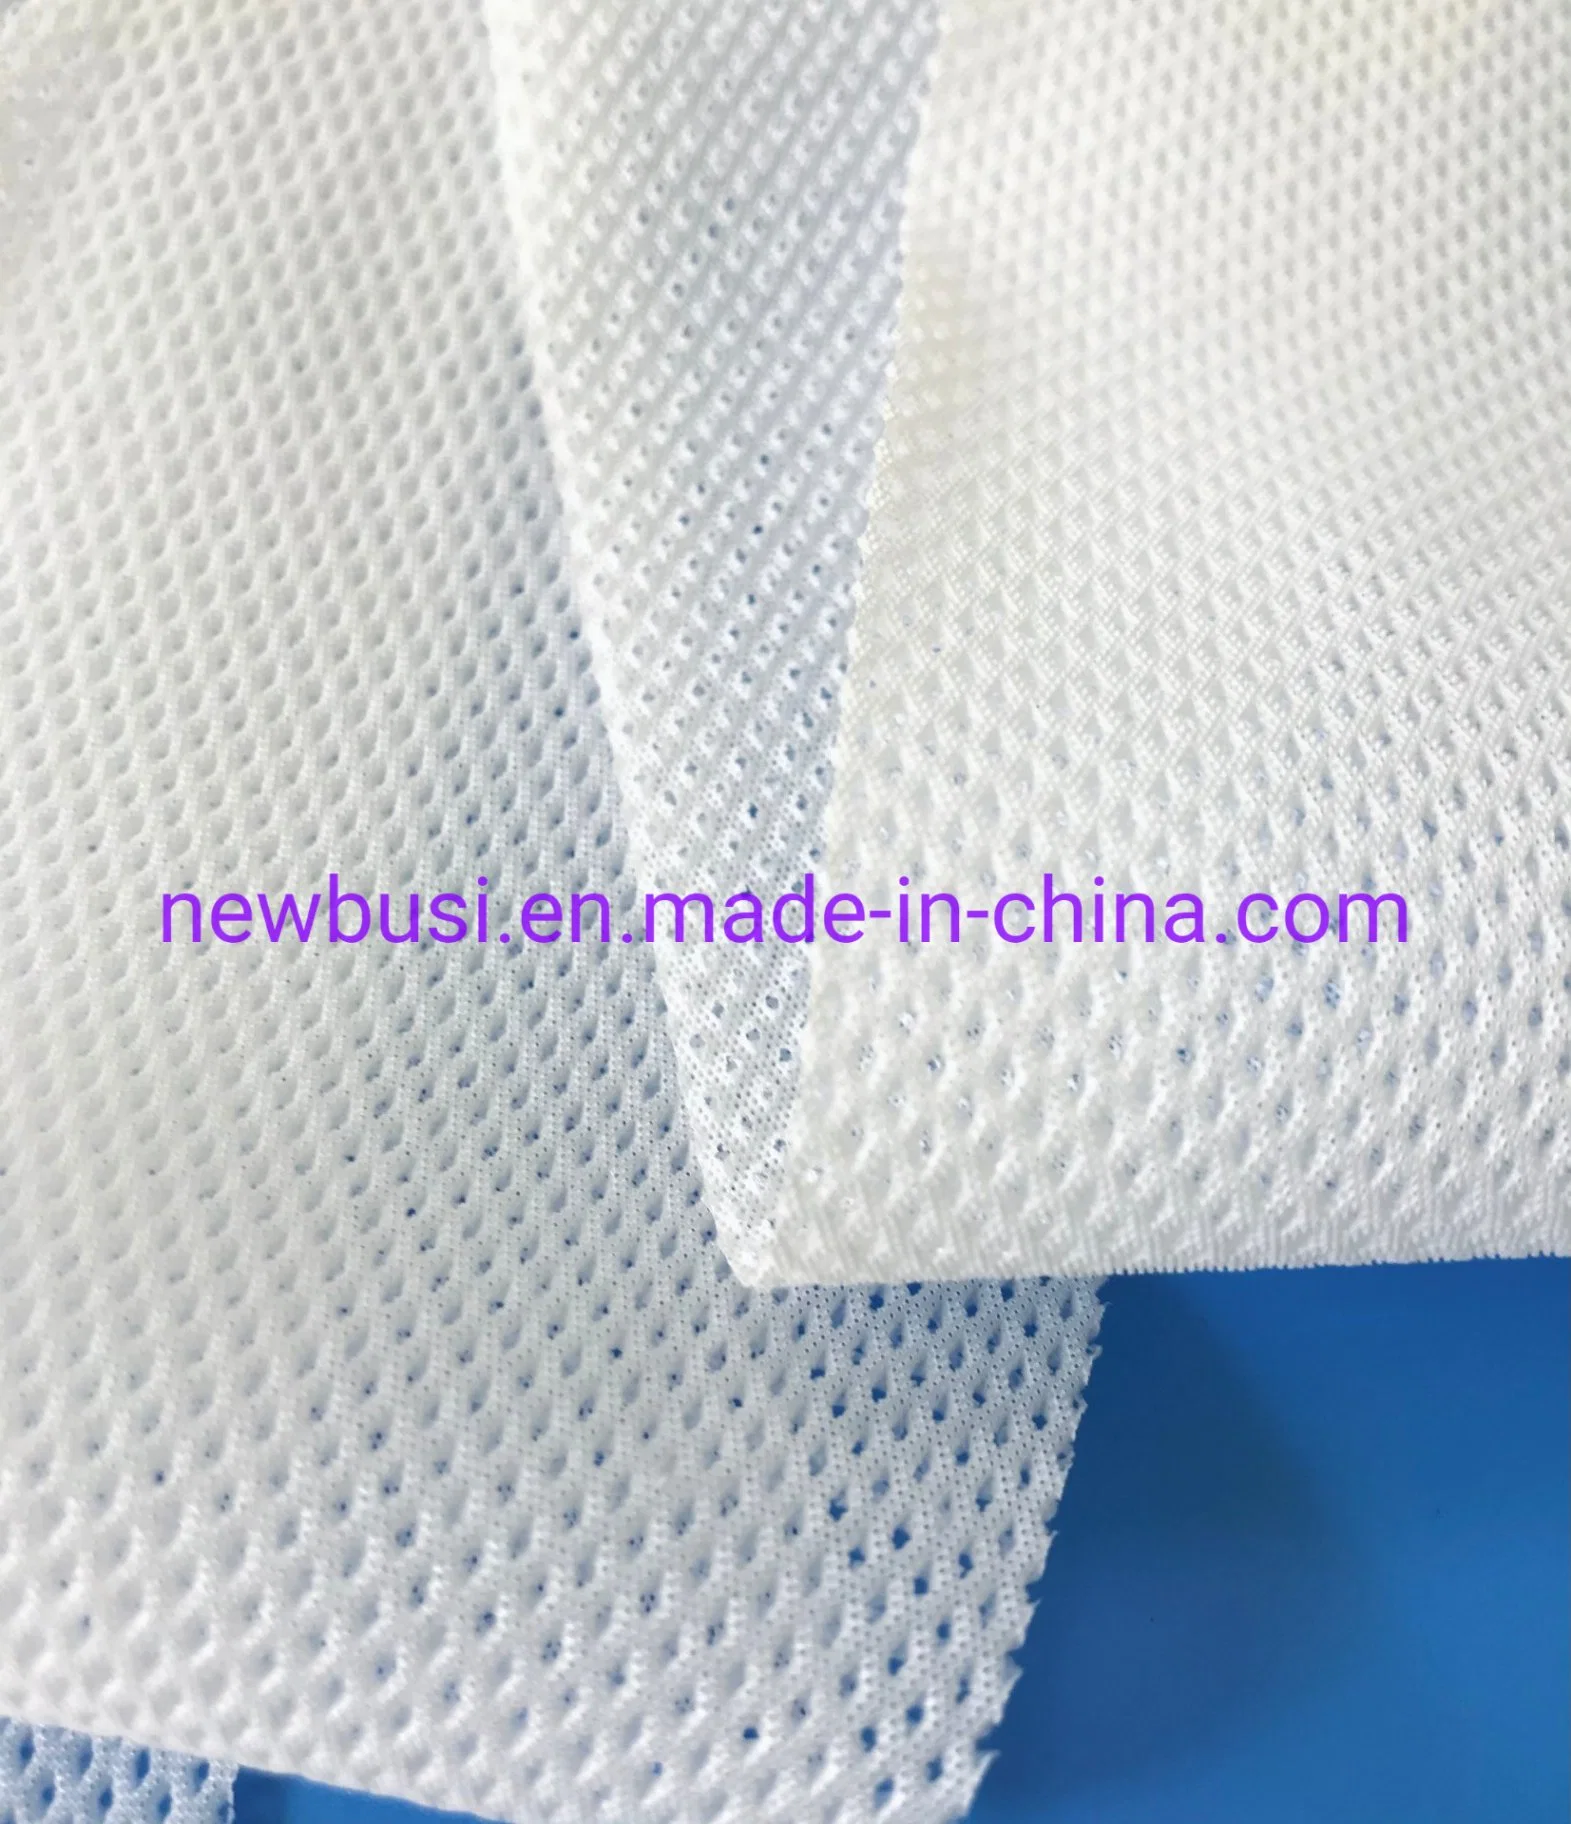 Hoja superior de película perforada seca para servilletas sanitarias